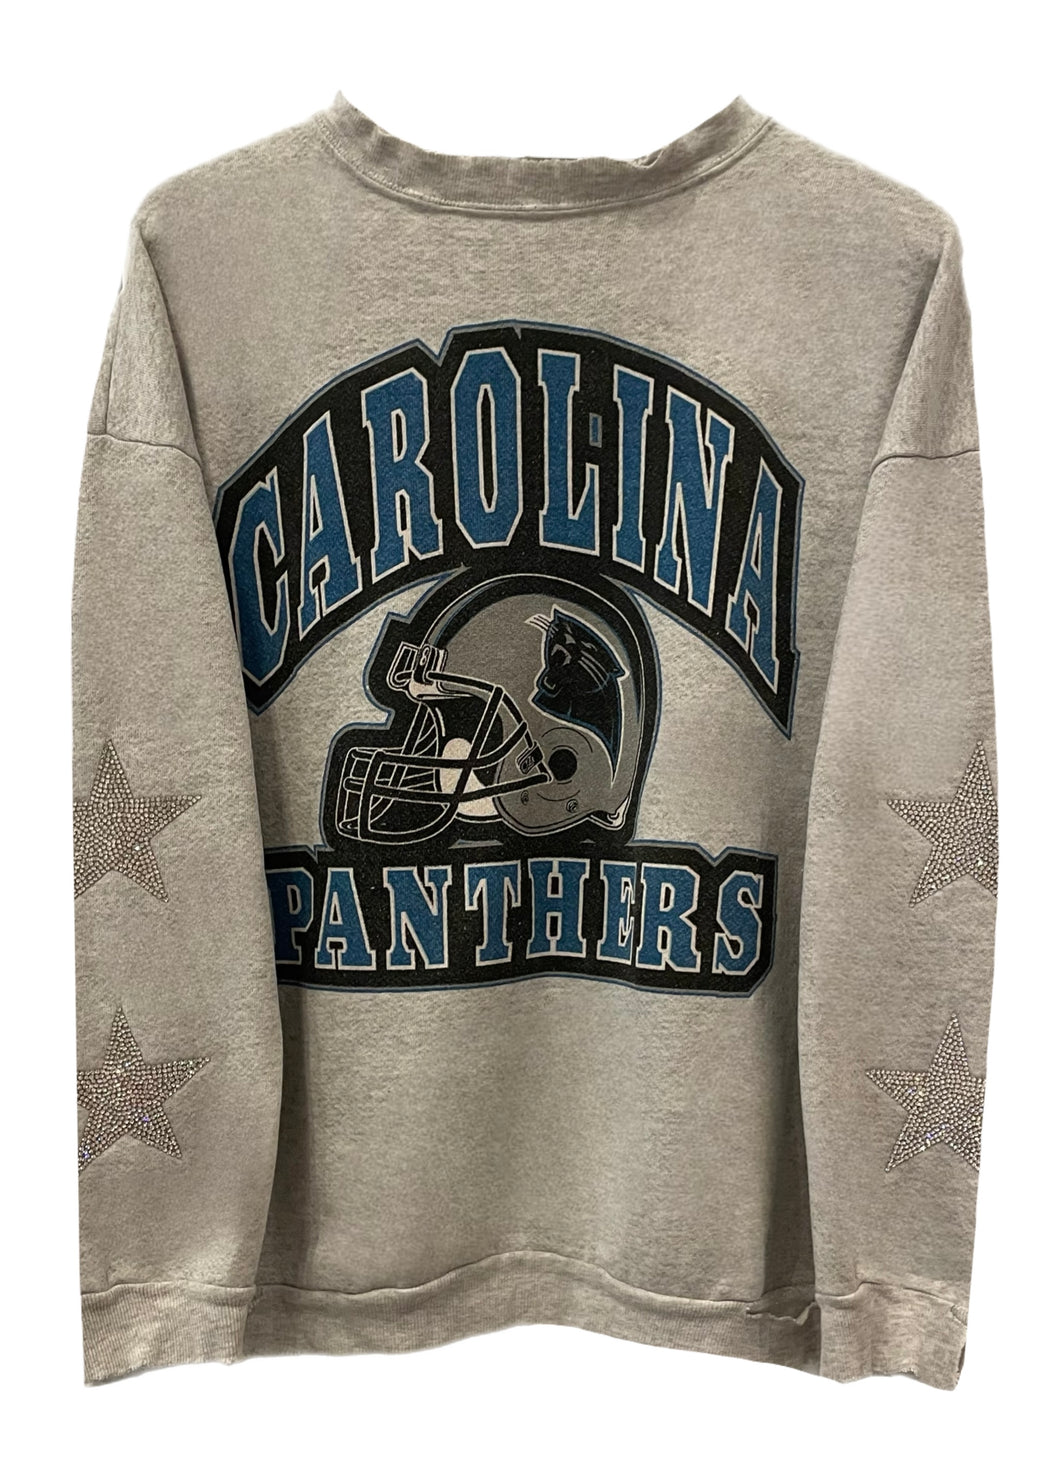 Carolina Panthers, Football One of a KIND Vintage Football Sweatshirt with Crystal Star Design